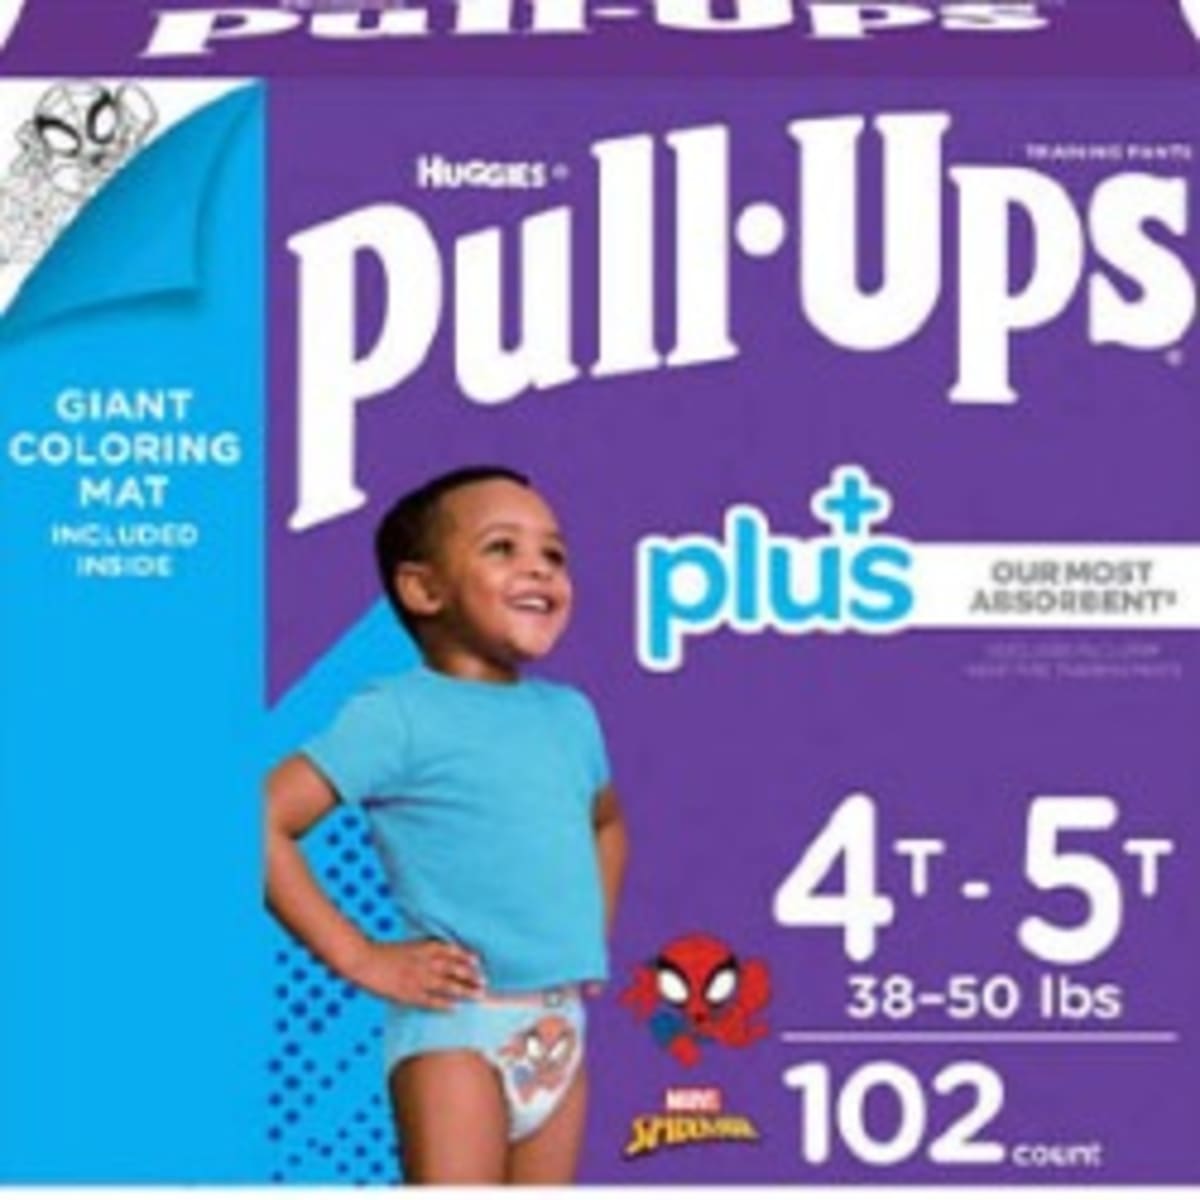 Huggies Pull-ups Plus Training Pants, 4t To 5t Boy, 102-packs